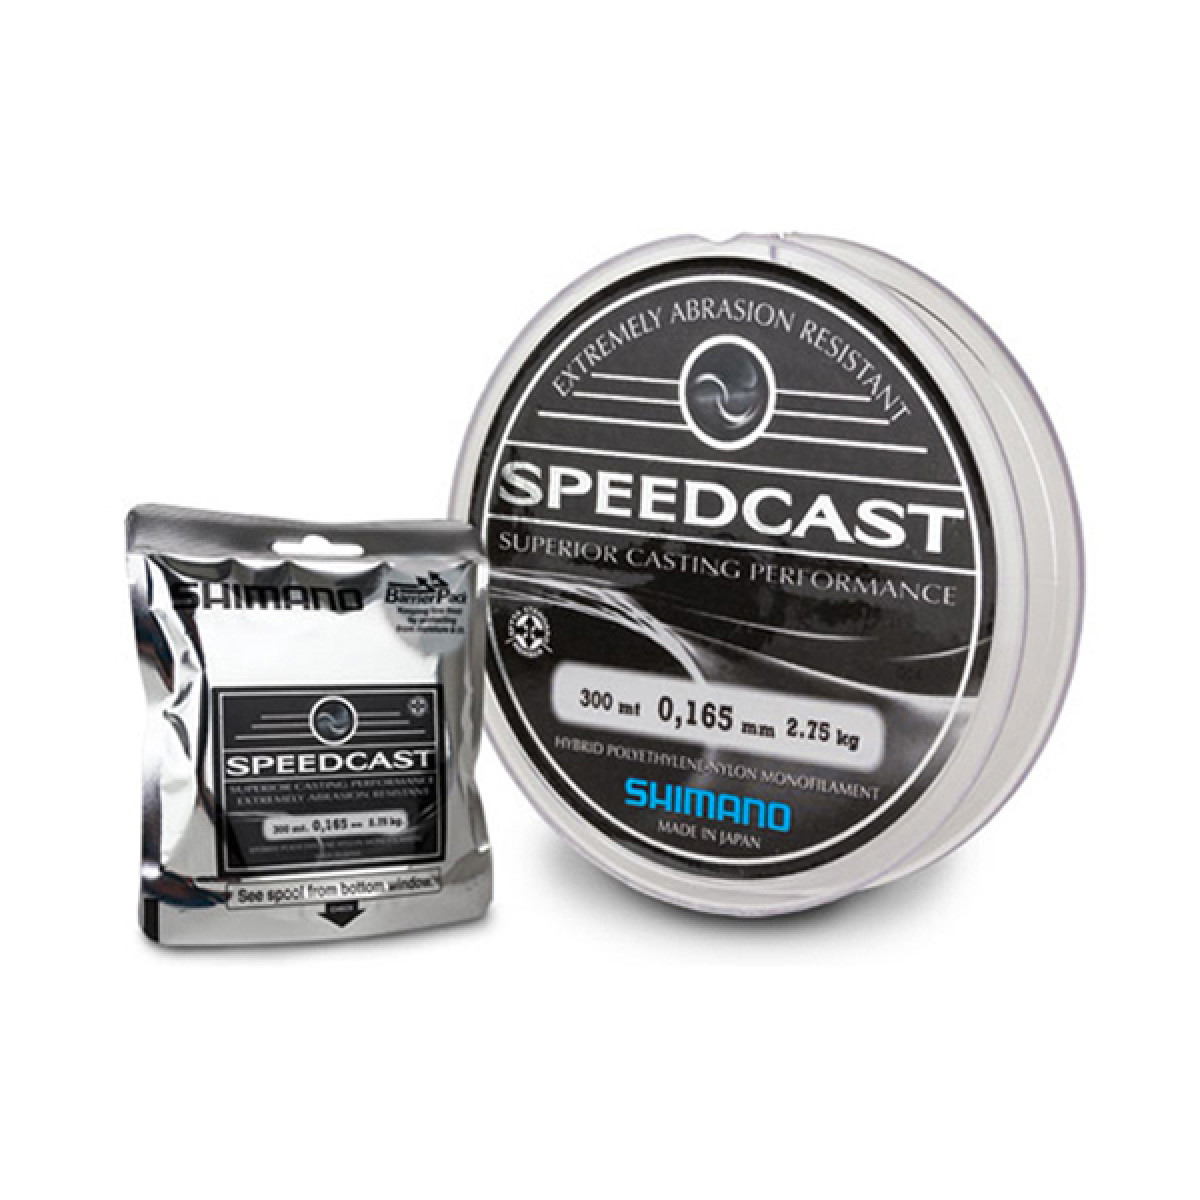 Speedcast 300 m